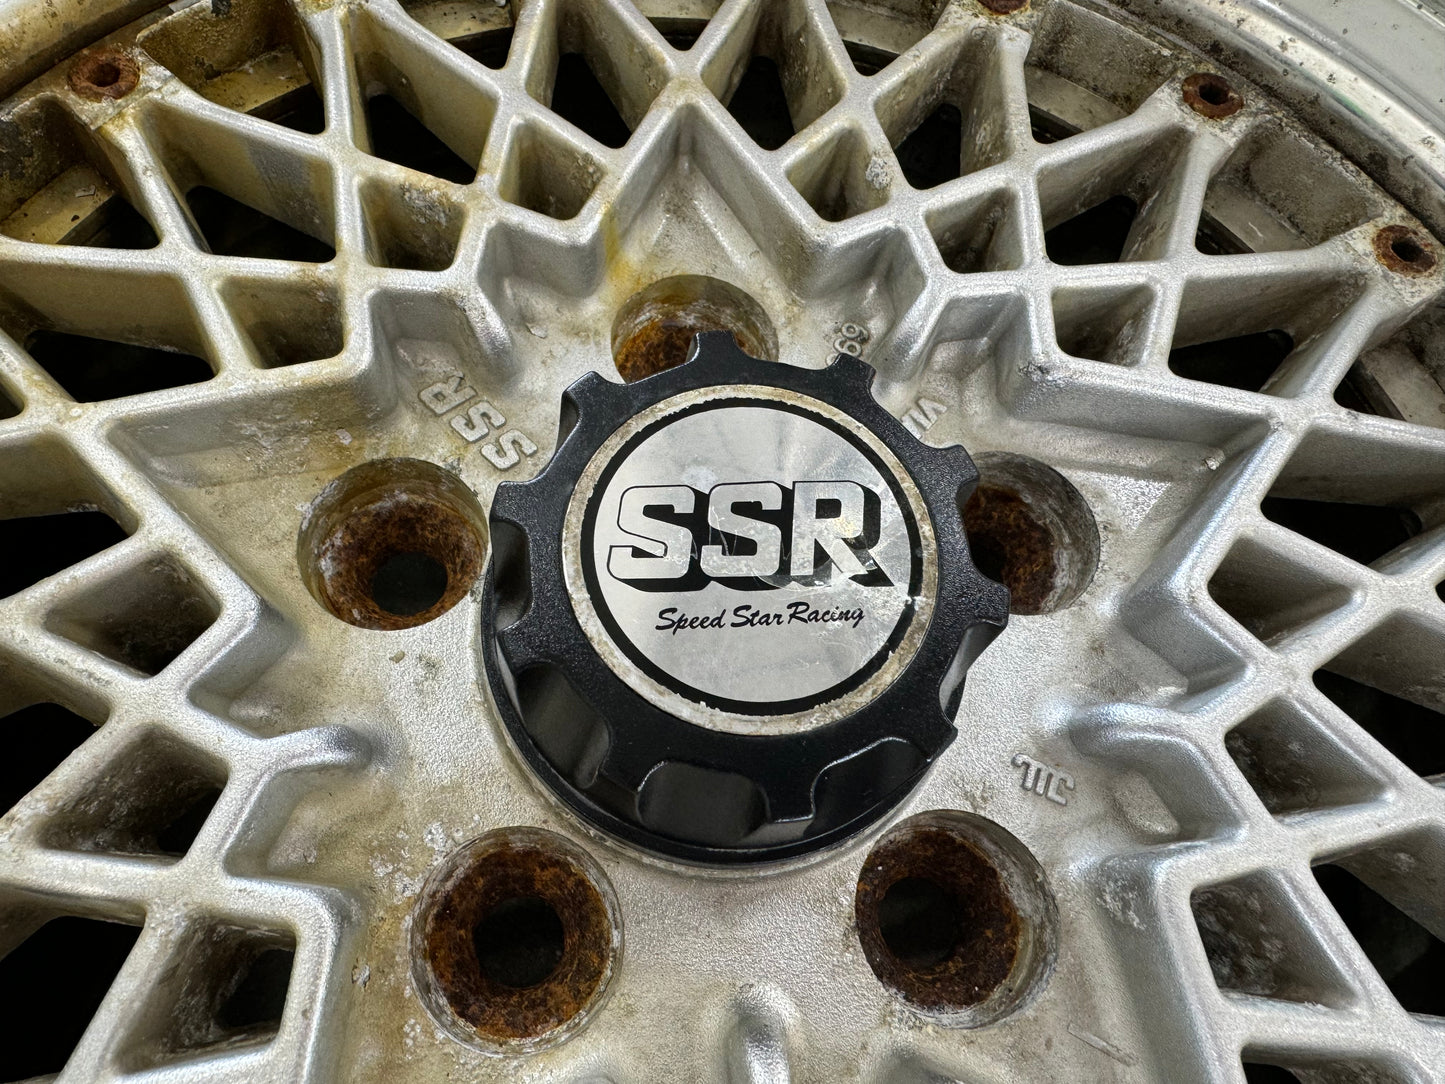 SSR Formula Mesh Wheels Speed Star Racing 5x114.3 15x7 -2 15x6.5 +5 R32 Skyline S13 Silvia Cressida Progres